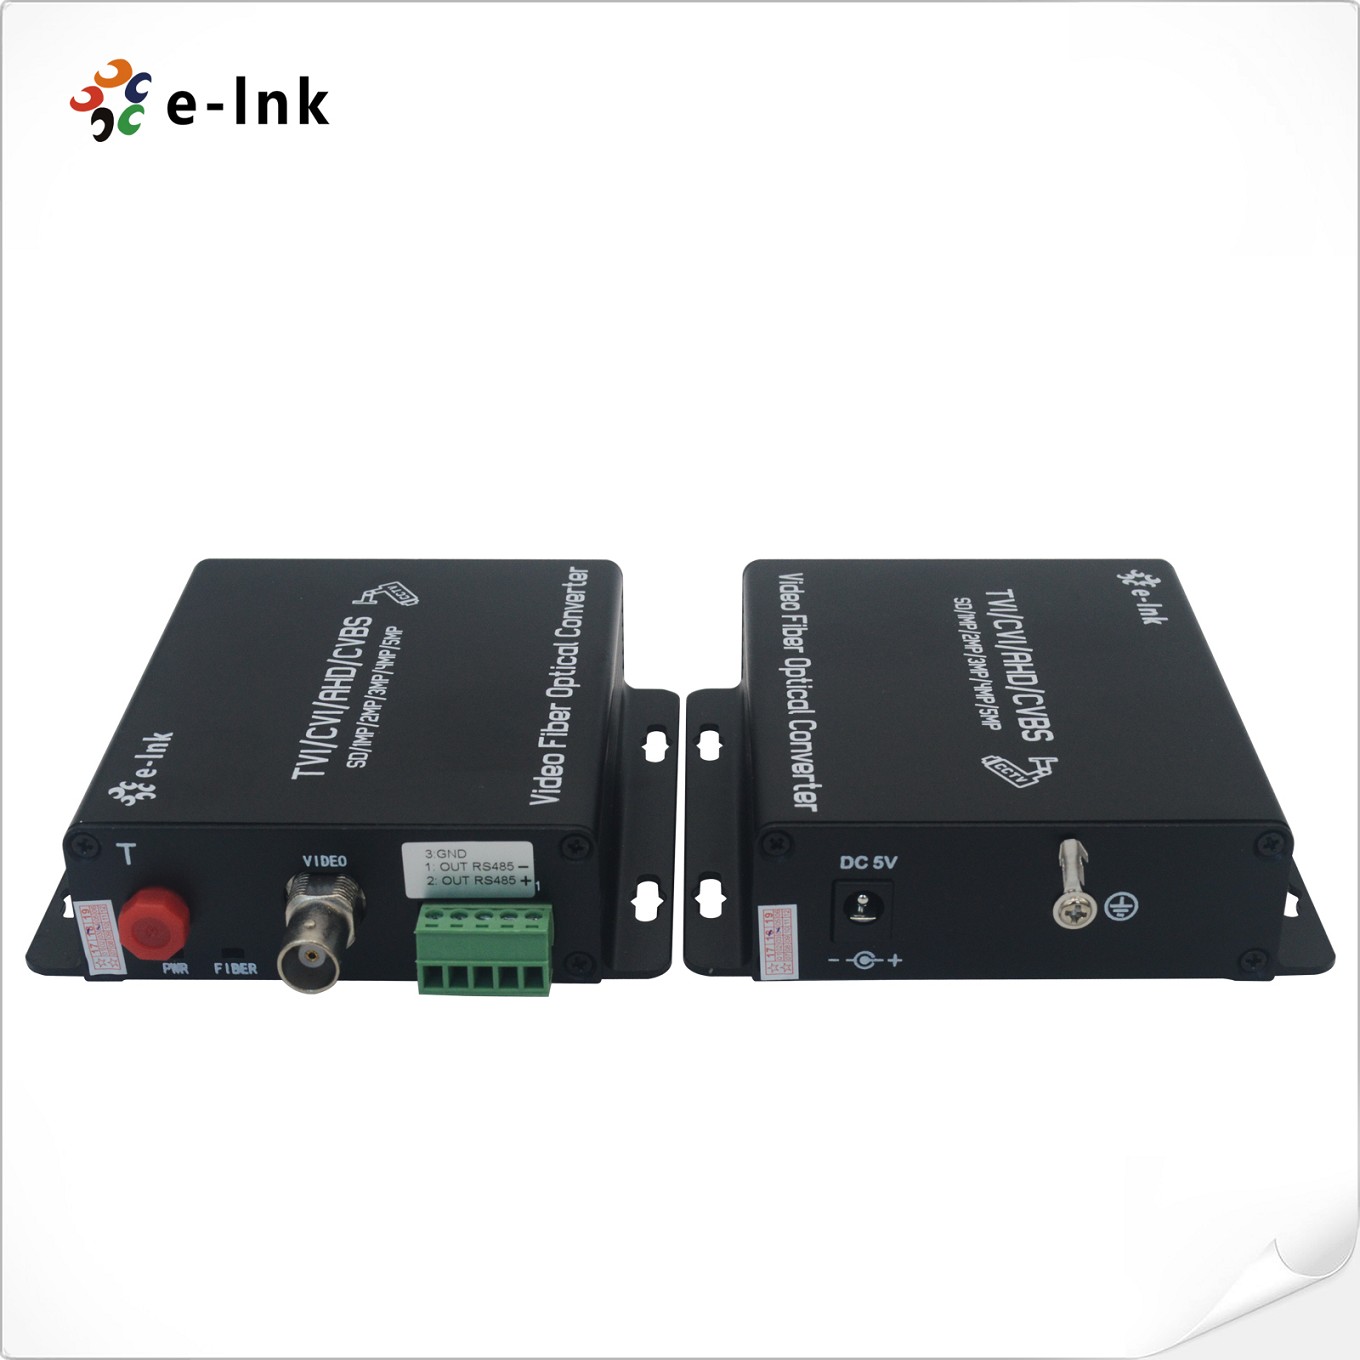 1Ch 5MP HD-AHD/HD-CVI/HD-TVI/CVBS 4-in-1 Video Fiber Converter